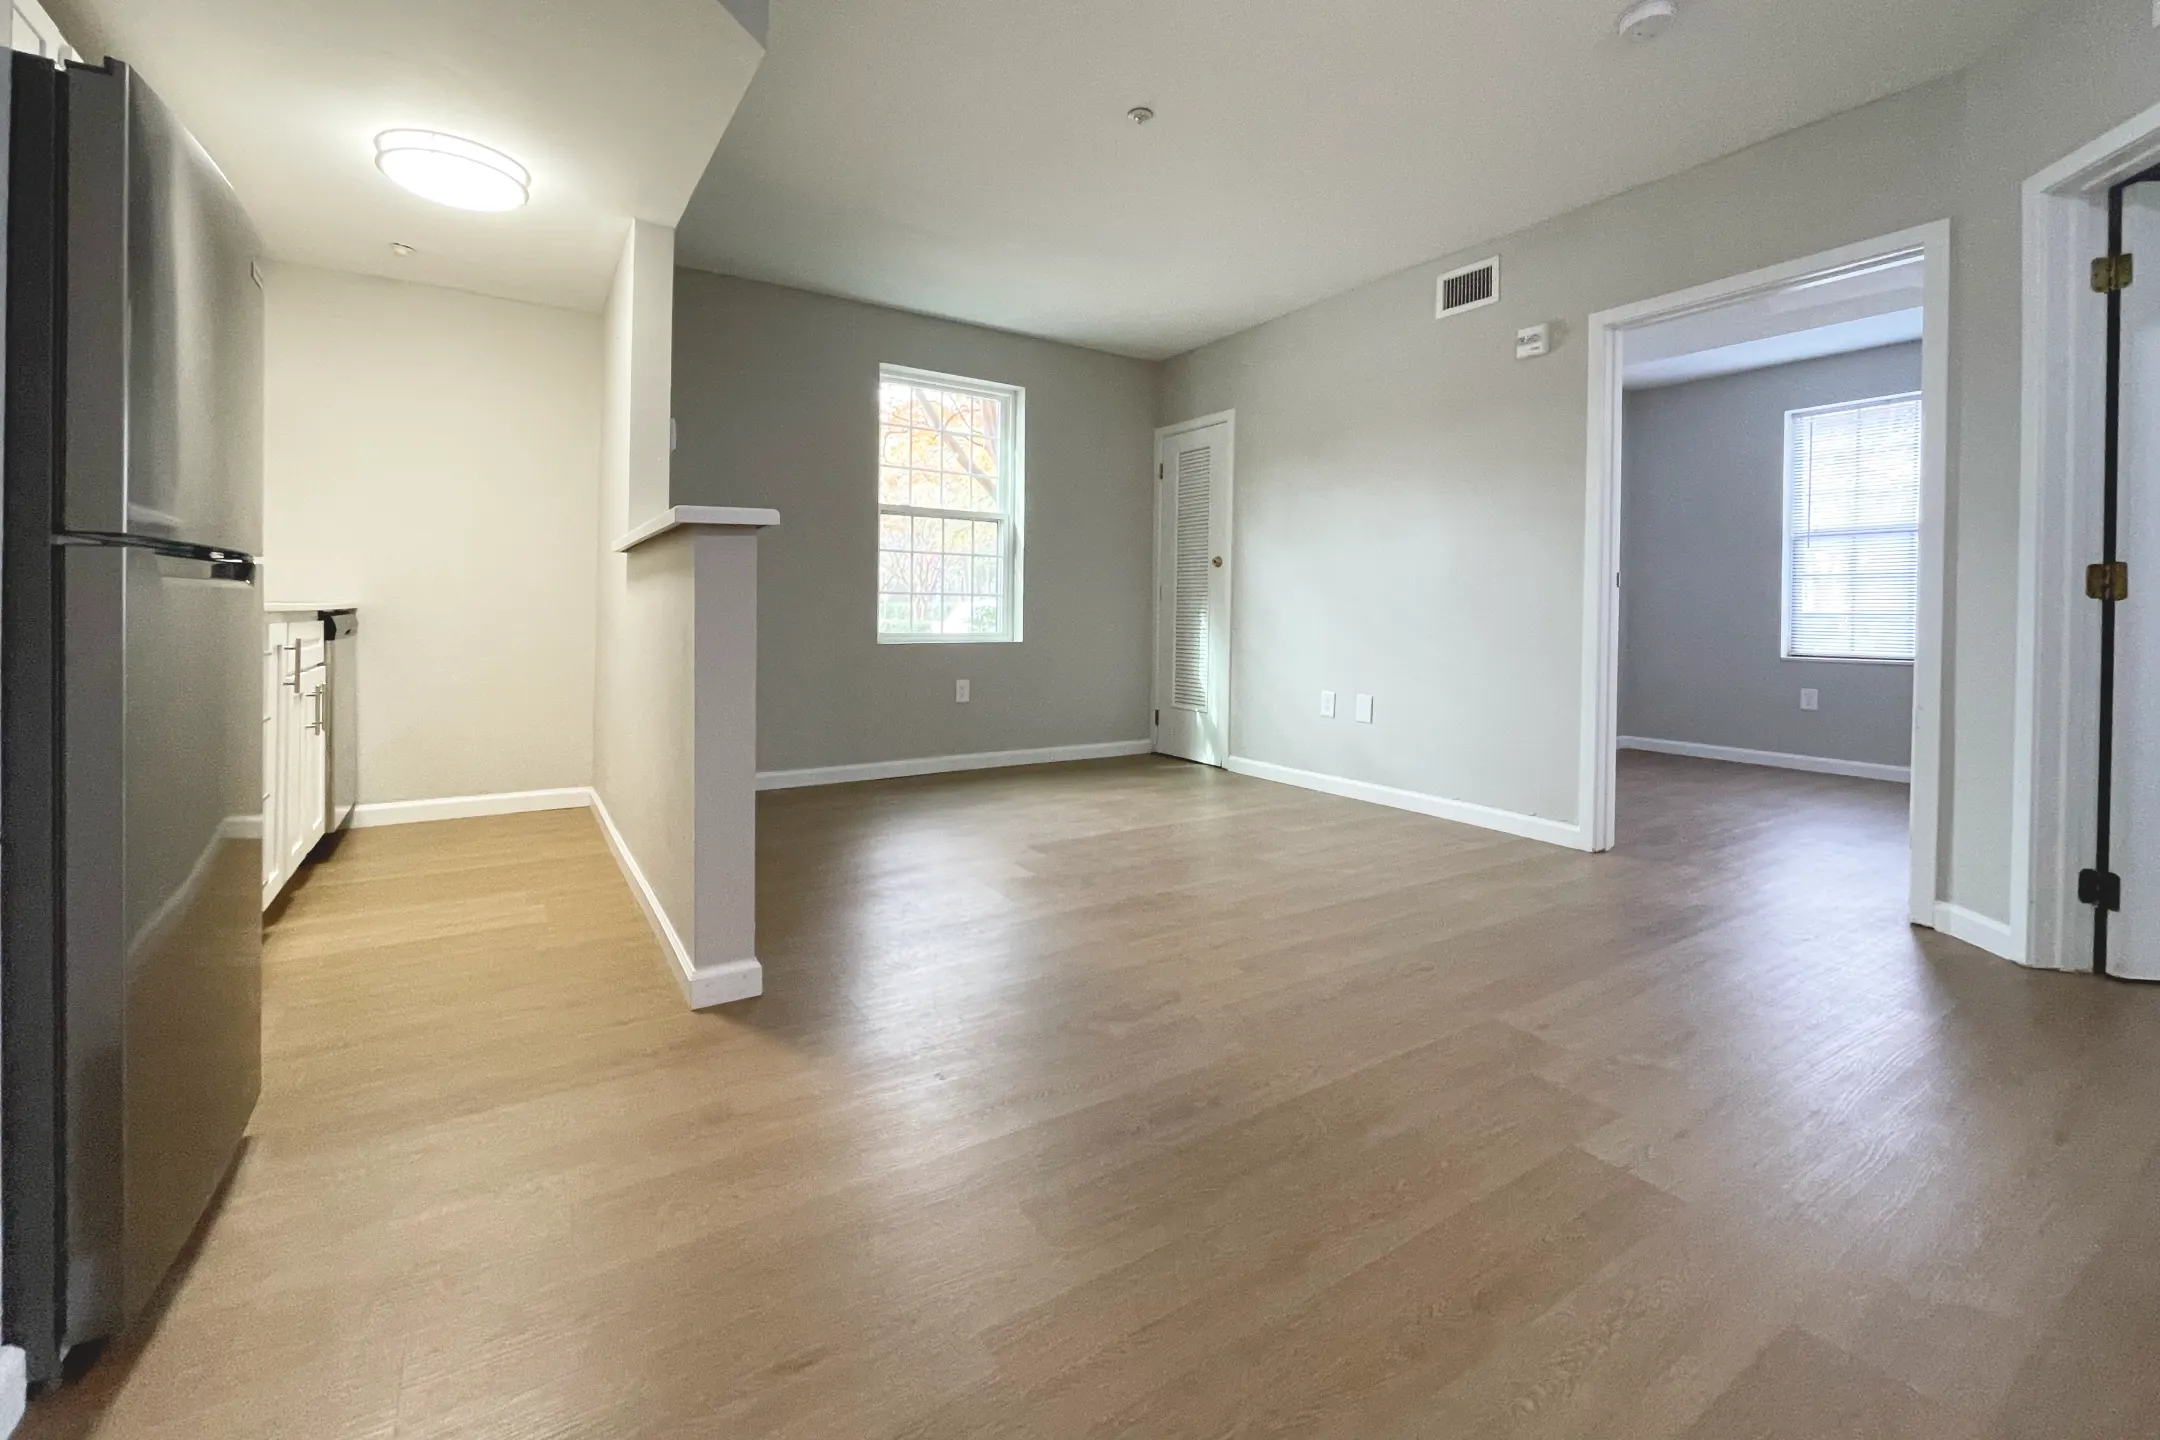 Living Room - Flats at 87Ten - Charlotte, NC